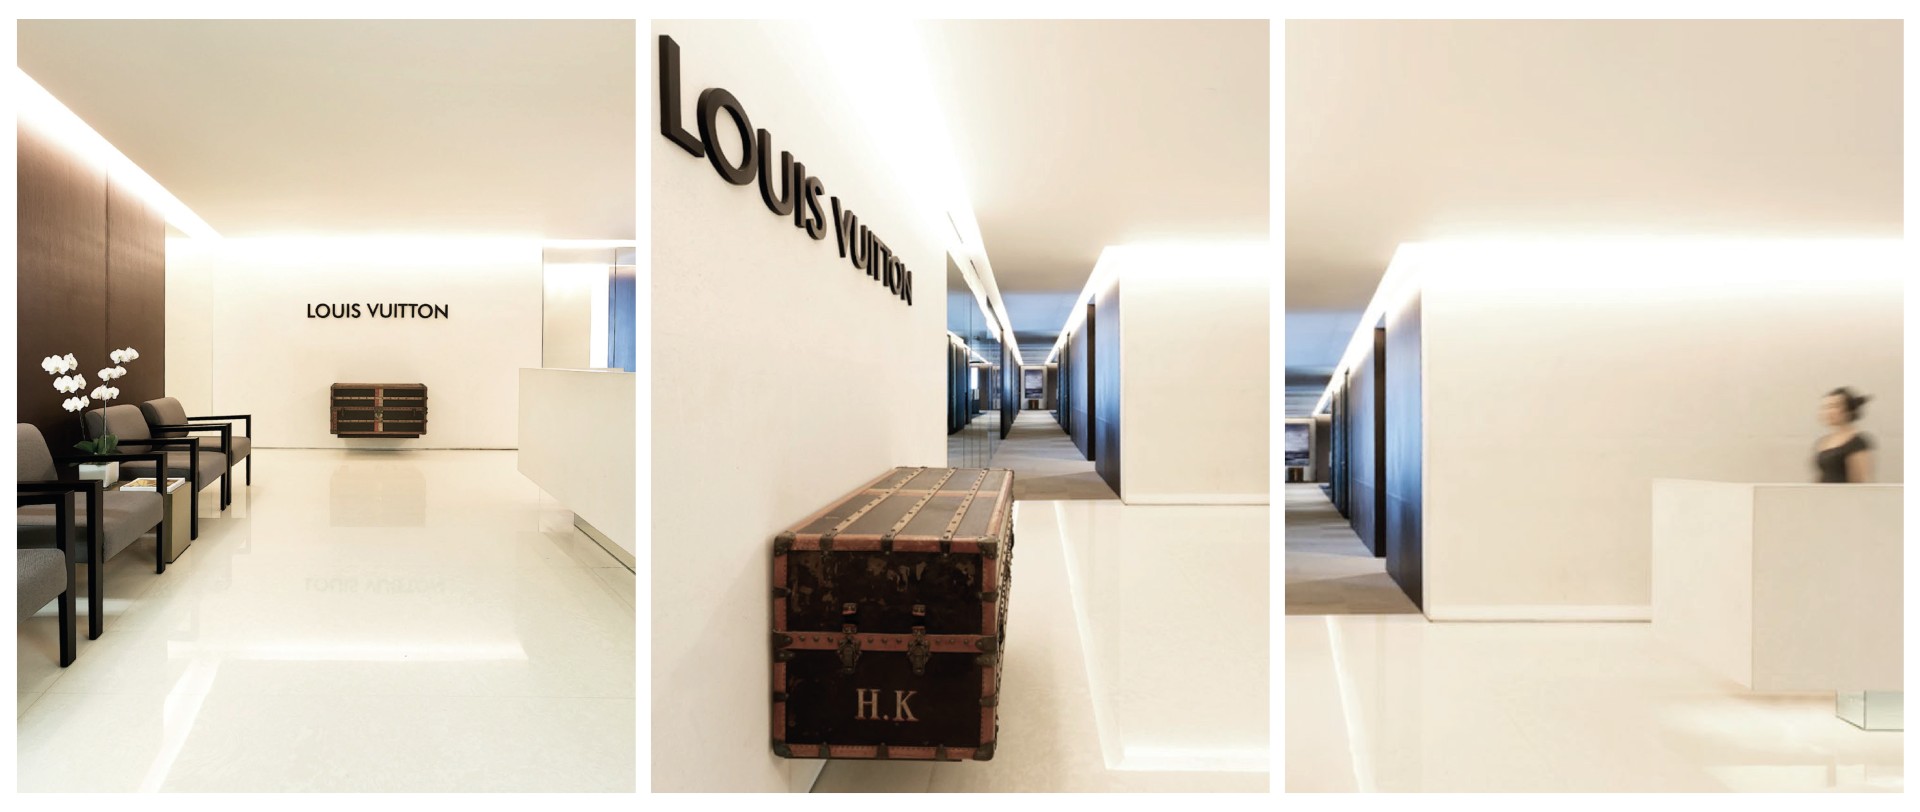 Louis Vuitton Di Jakarta :: Keweenaw Bay Indian Community